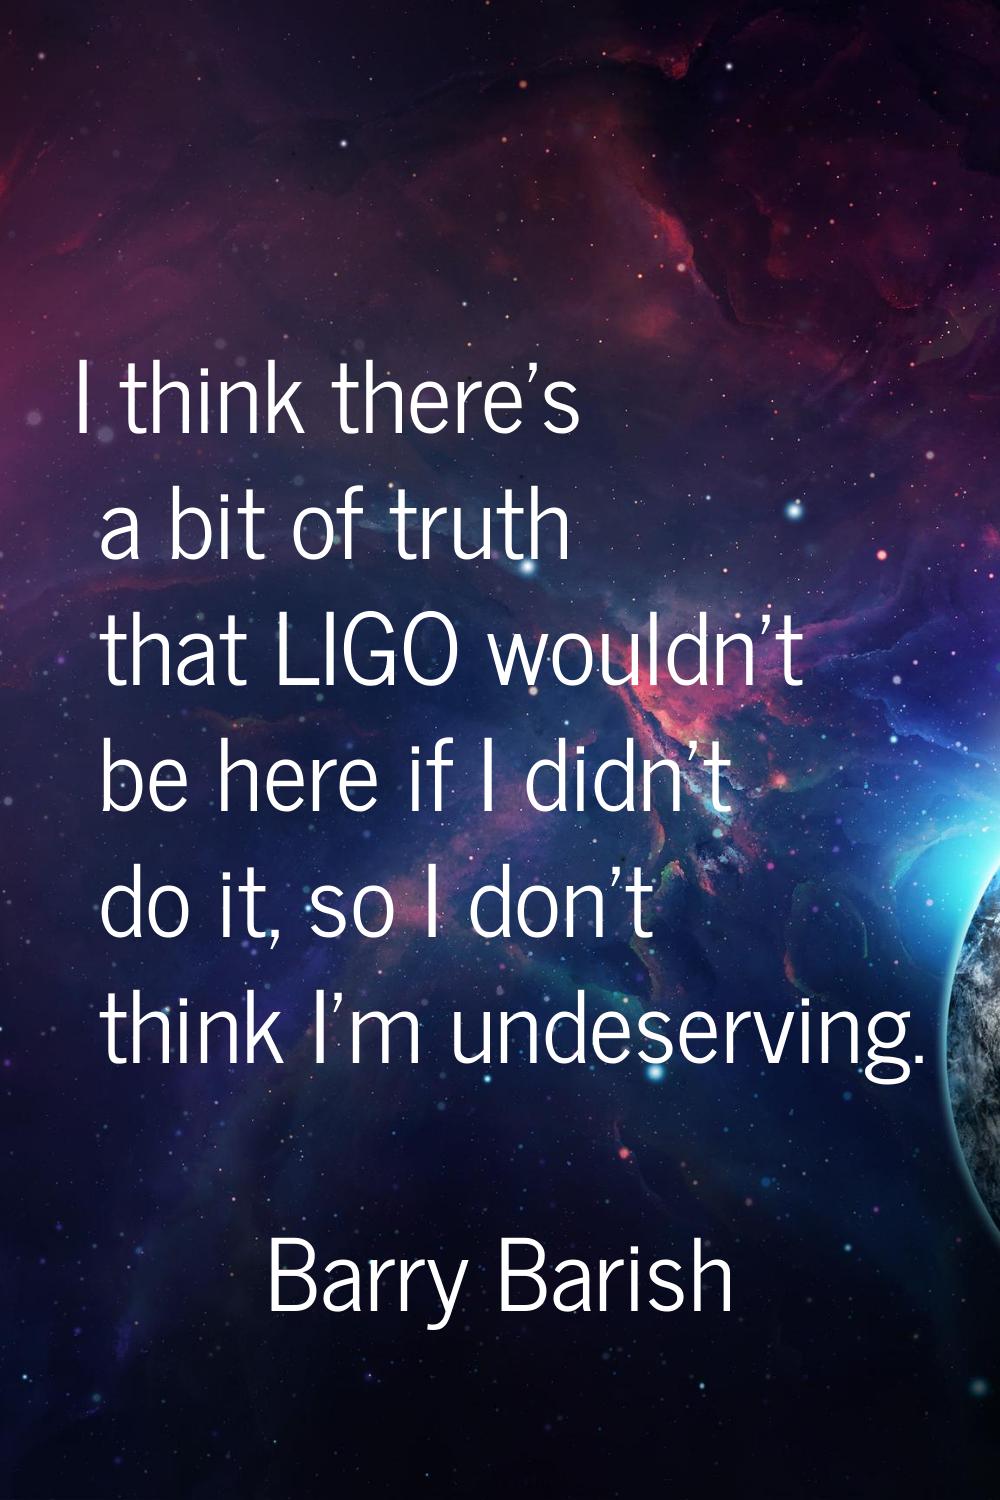 I think there's a bit of truth that LIGO wouldn't be here if I didn't do it, so I don't think I'm u